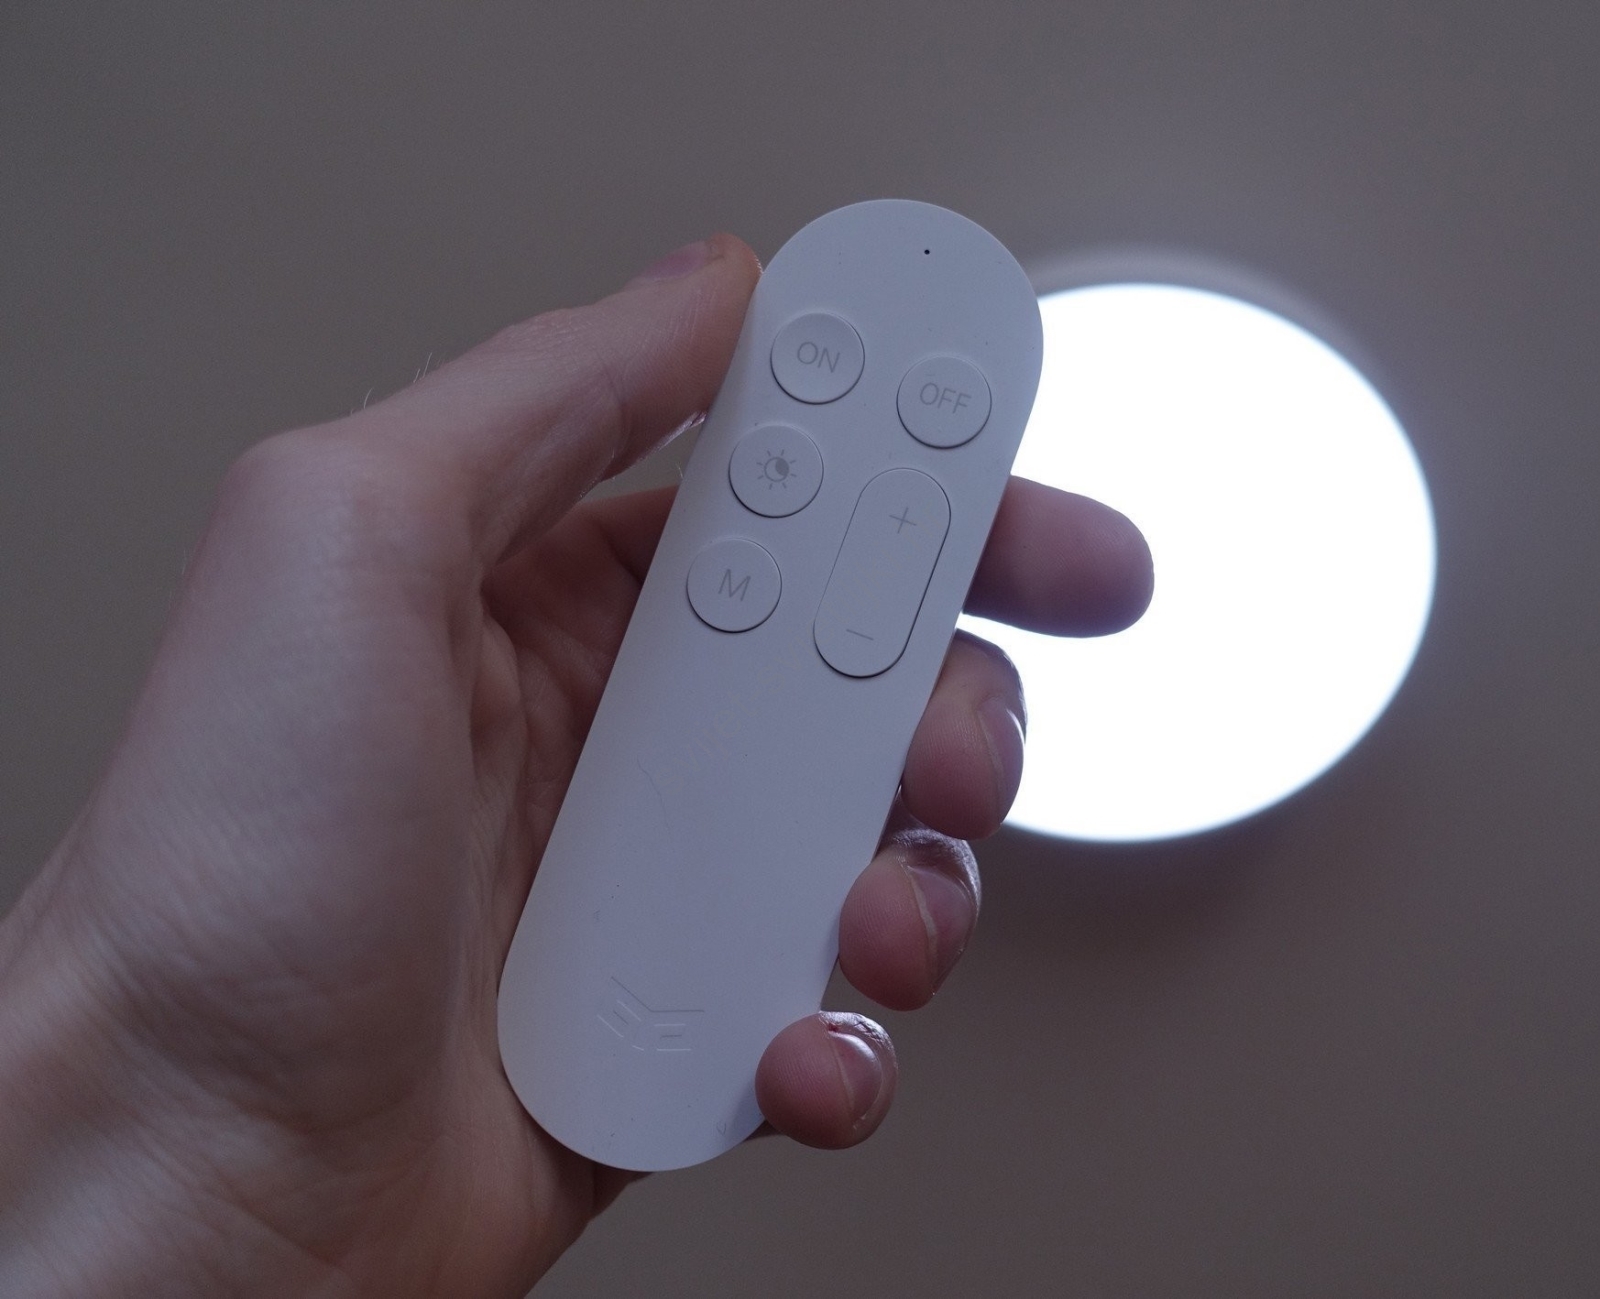 Xiaomi Mi Led Light